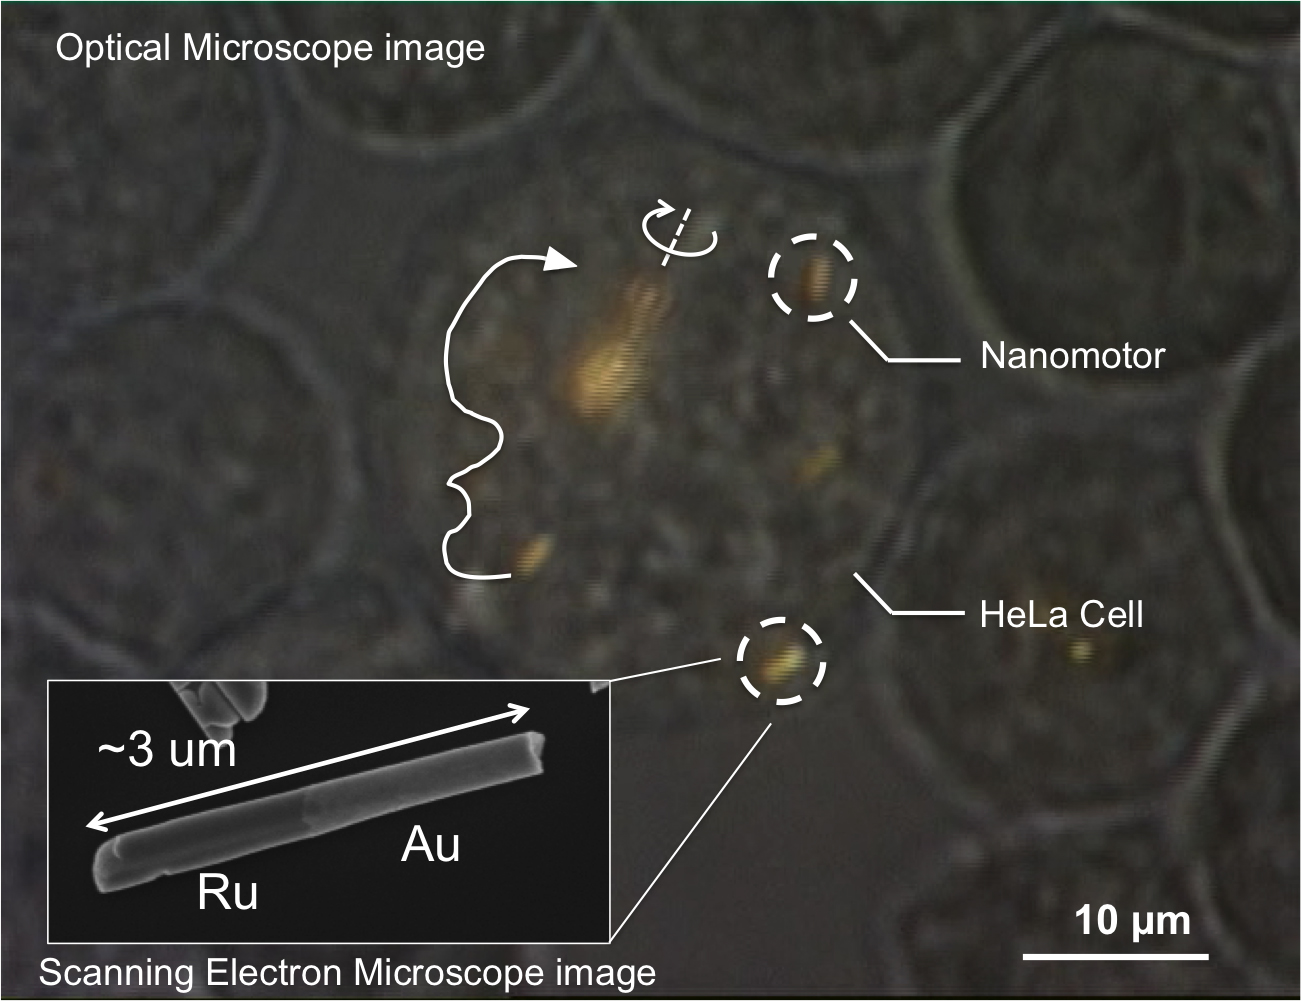 Mallouk_microscope-image_2-2014